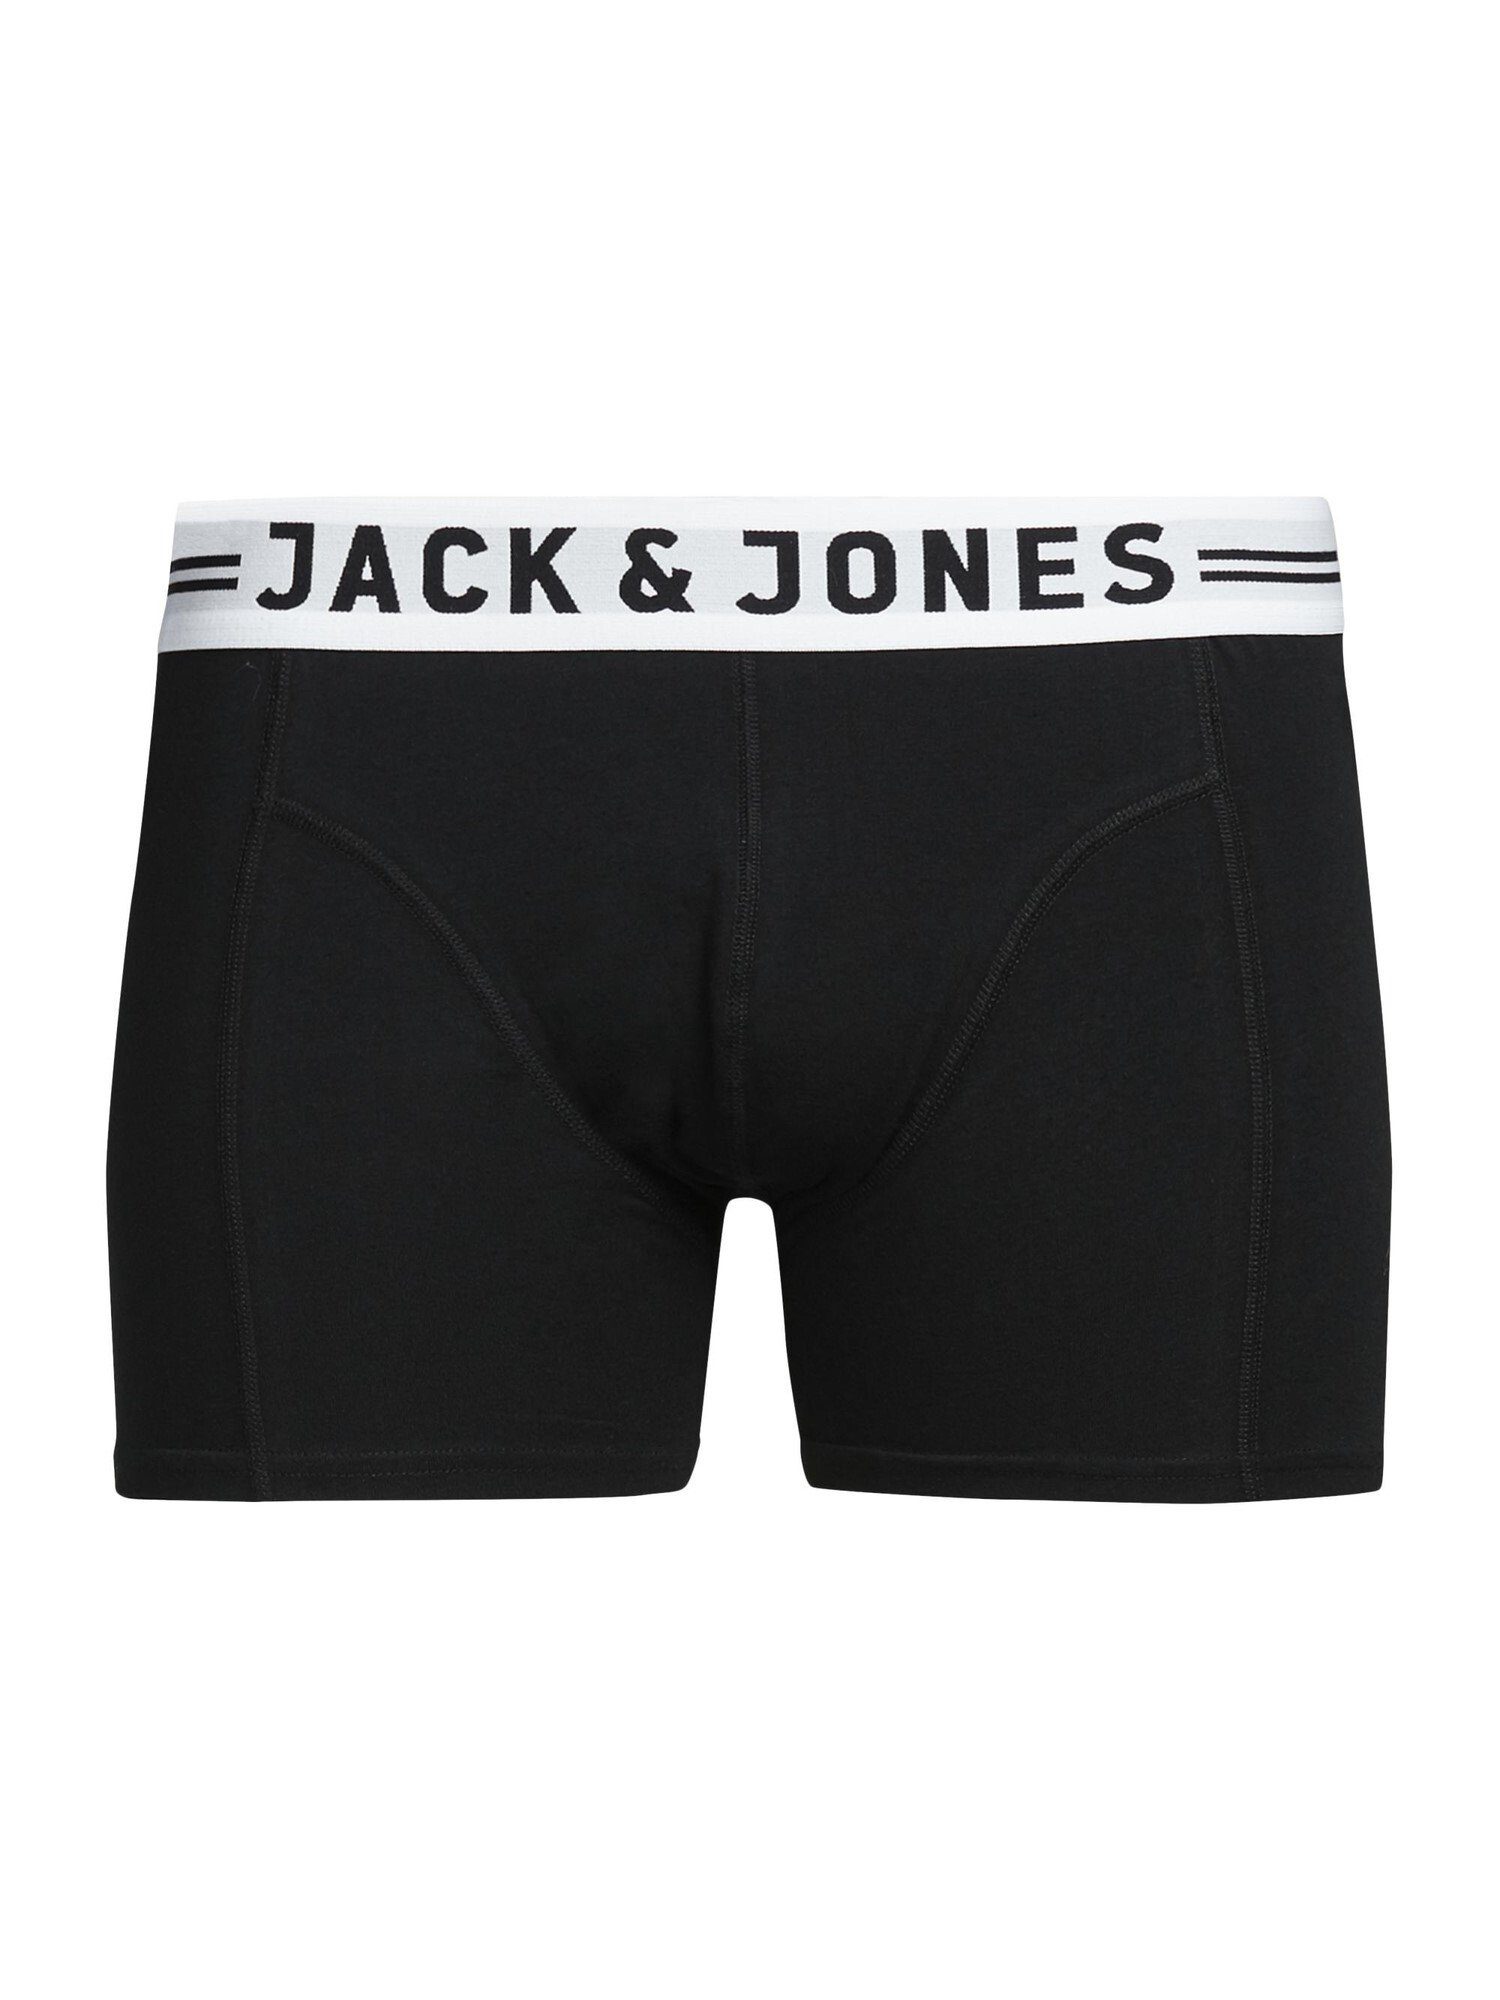 & Jones Unterhose Sense Trunks Jack Boxershorts schwarz